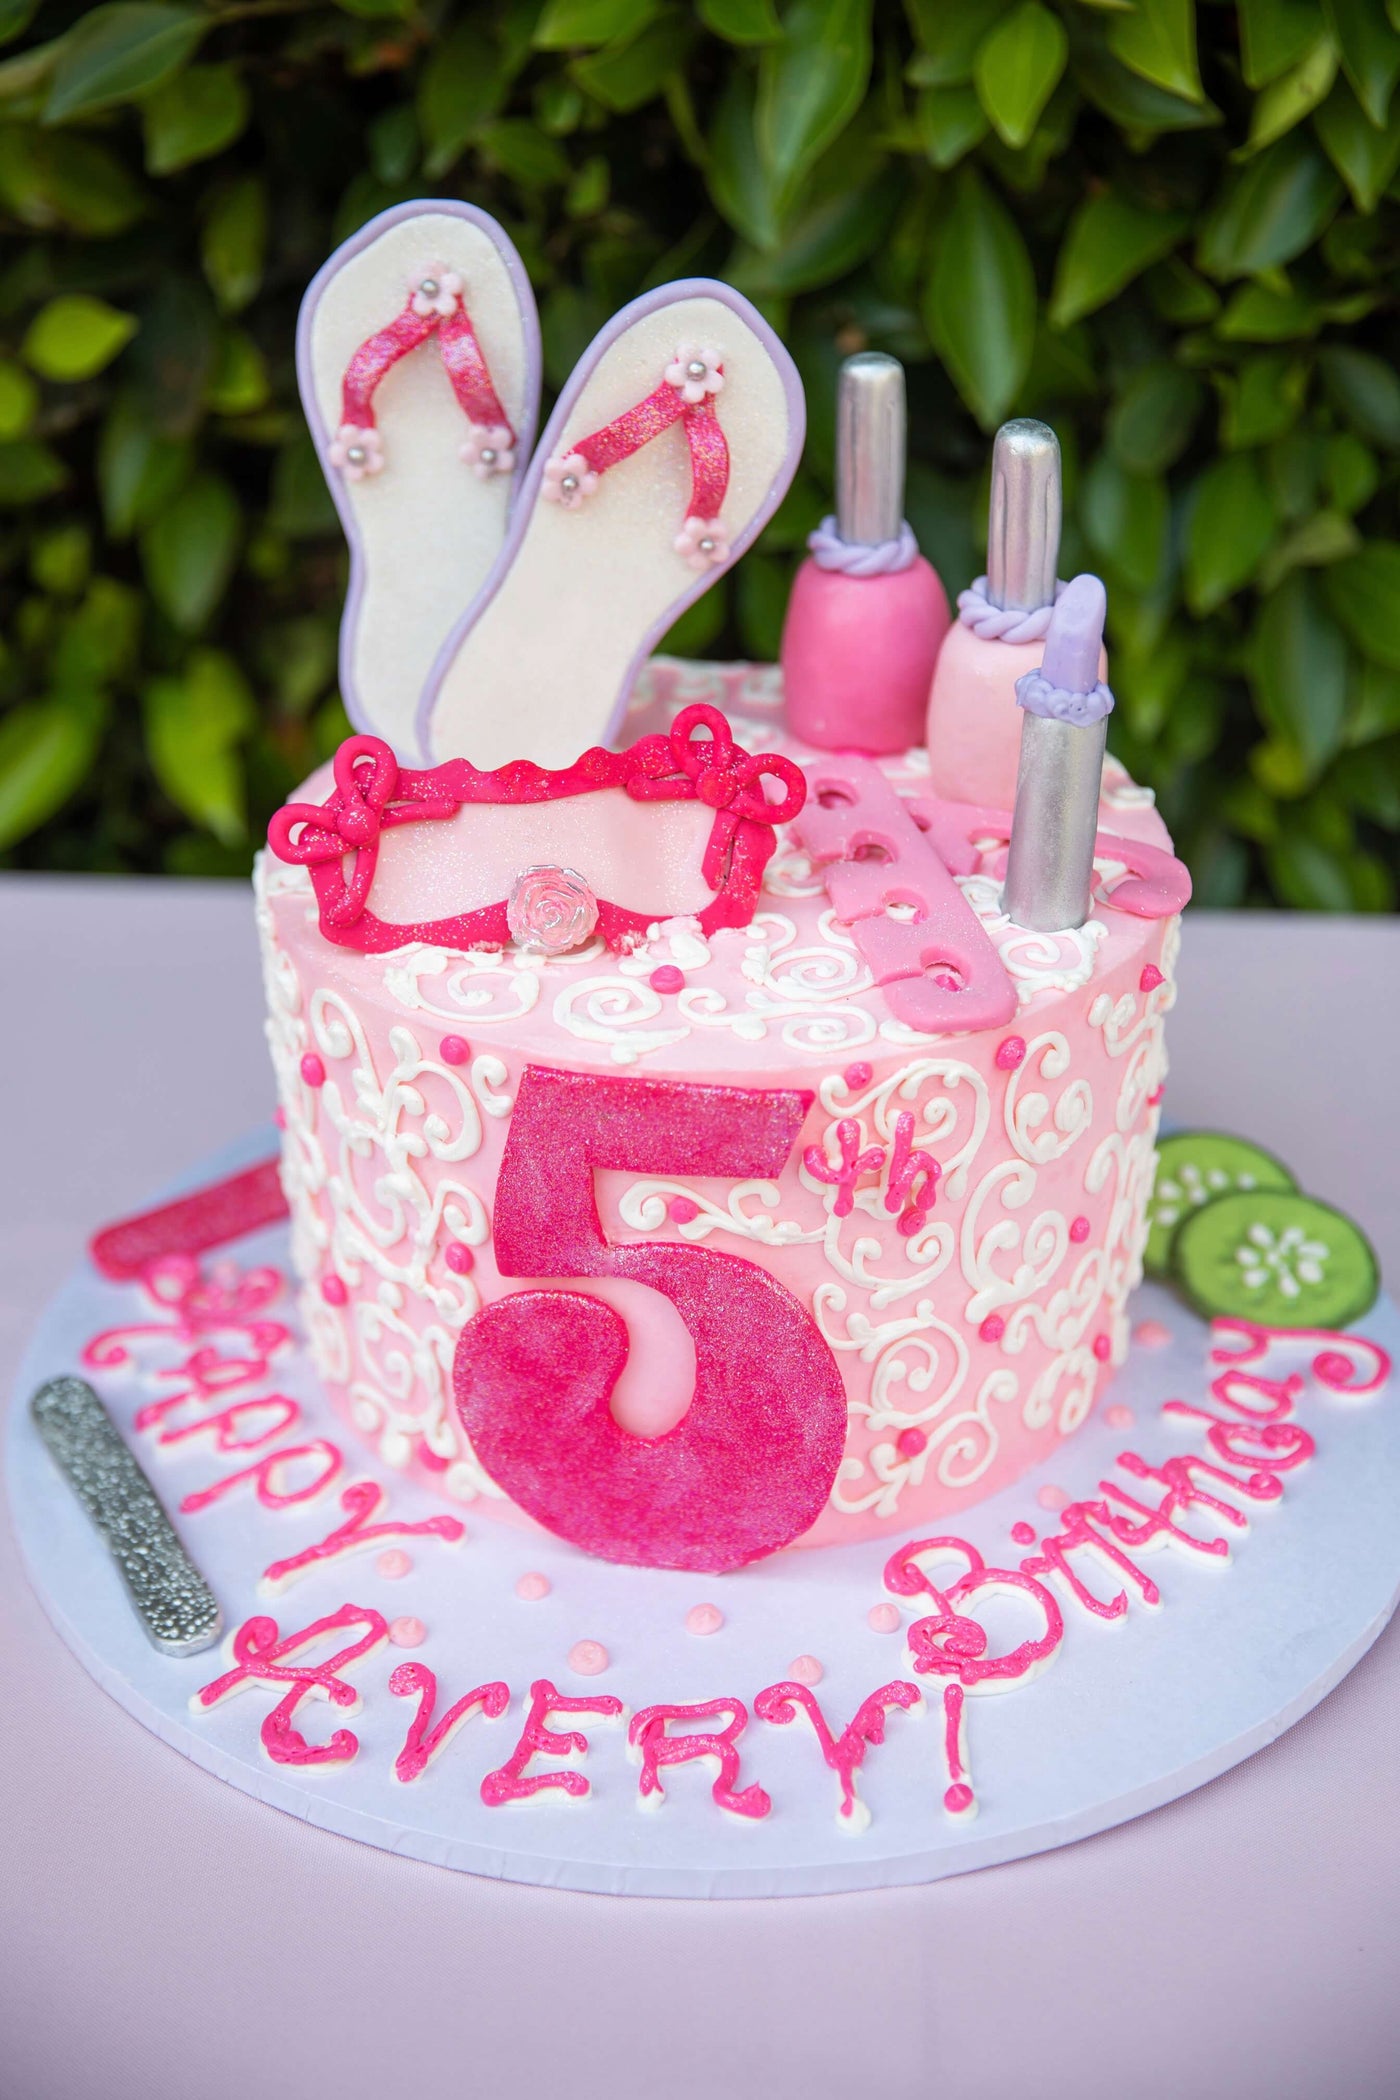 Spa Swirl Bday Cake - Sweet E's Bake Shop